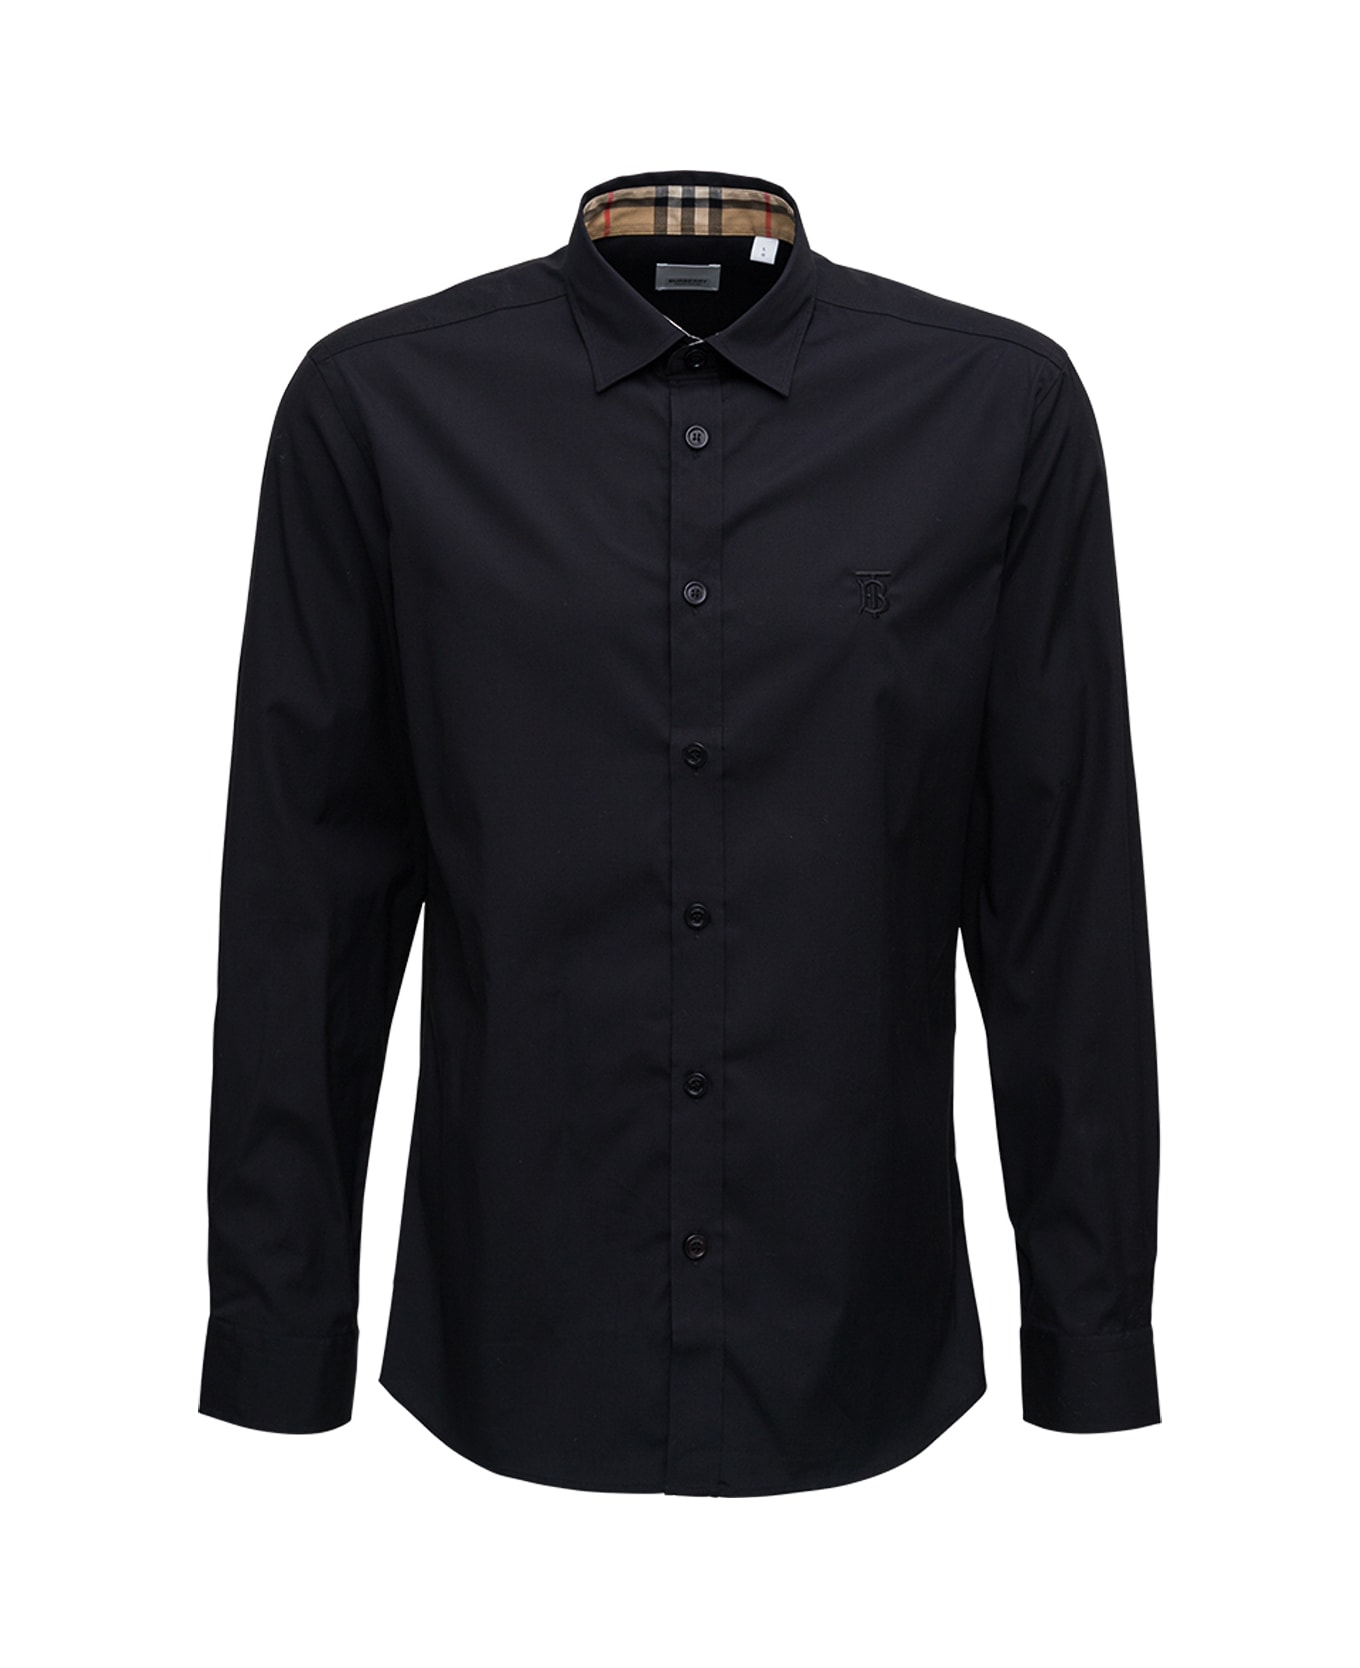 Burberry Man's Black Cotton Polin Shirt With Logo - Black